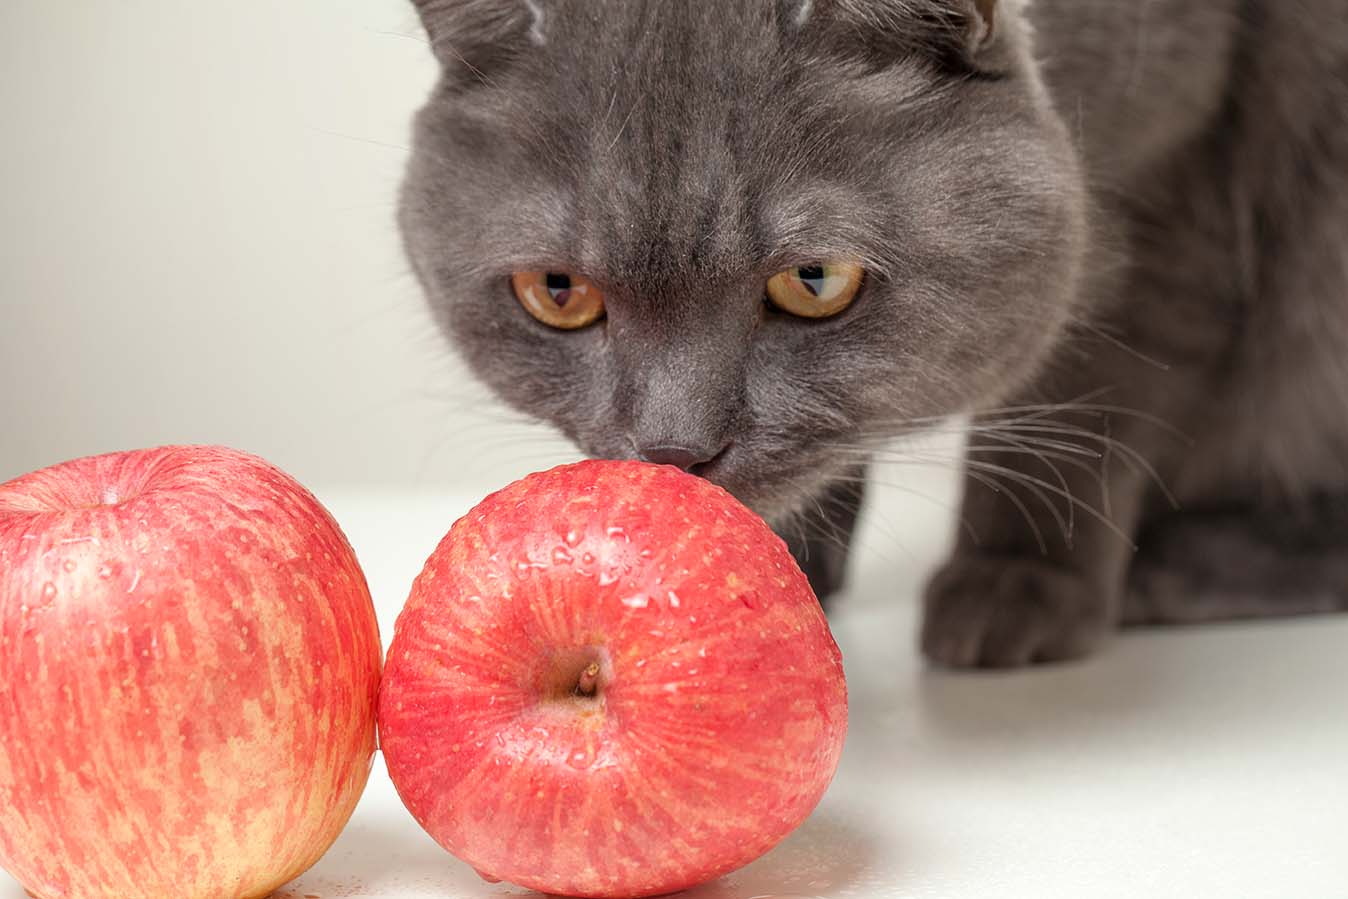 cat smelling apples